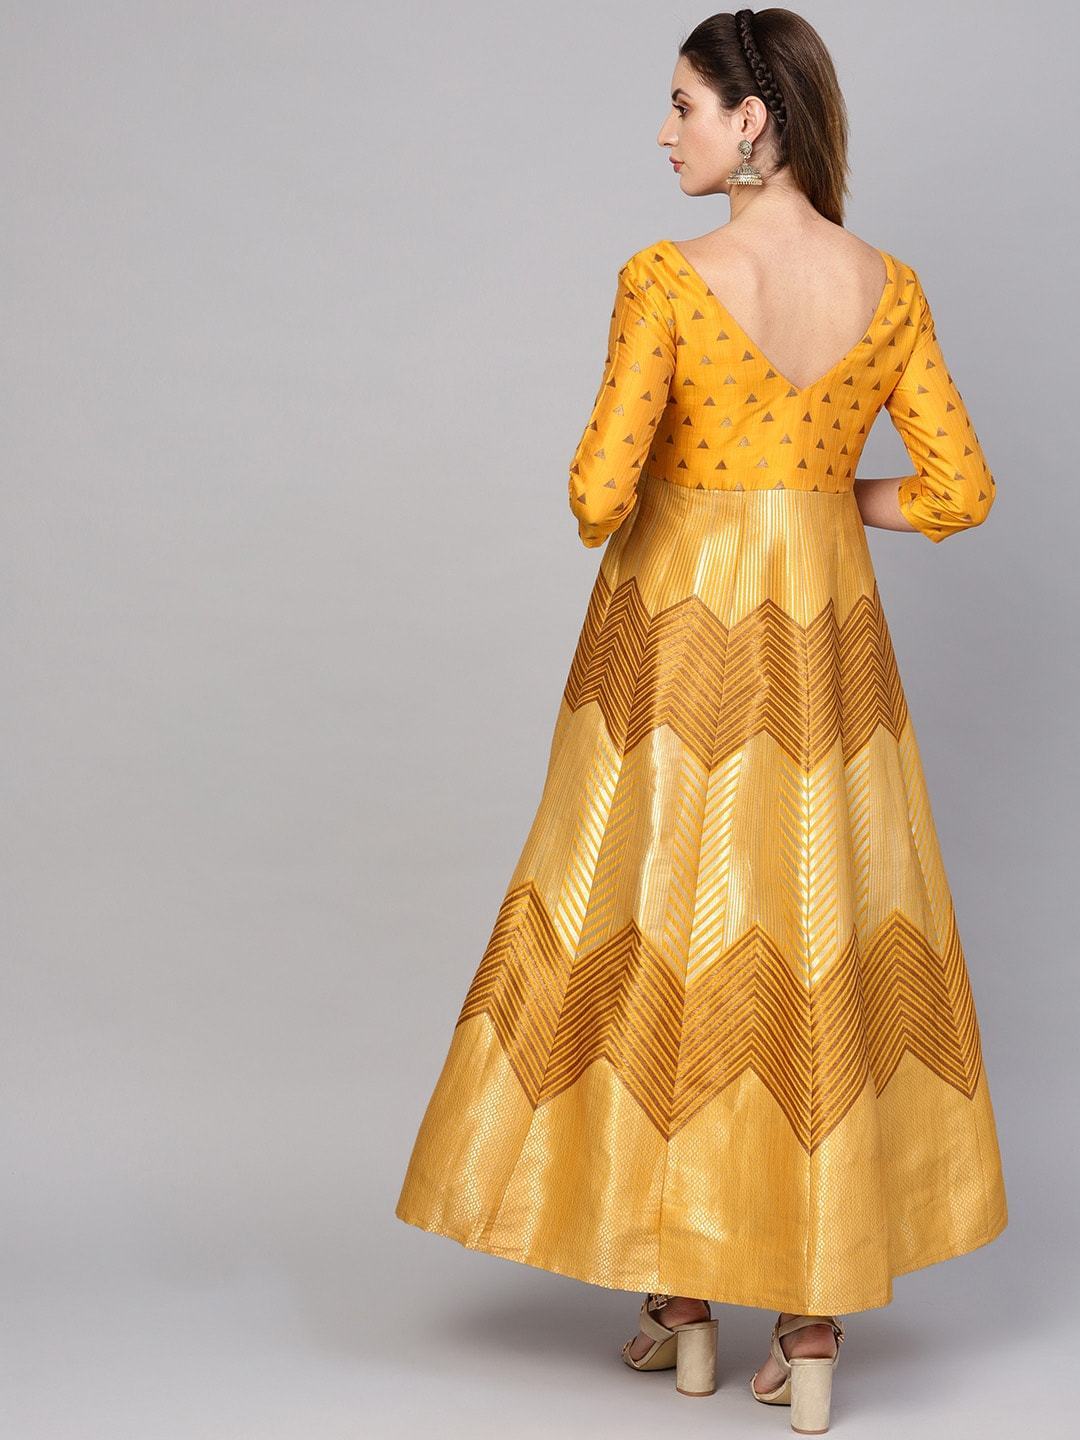 Women's  Mustard Yellow & Golden Jacquard Patterned Brocade Maxi Dress - AKS